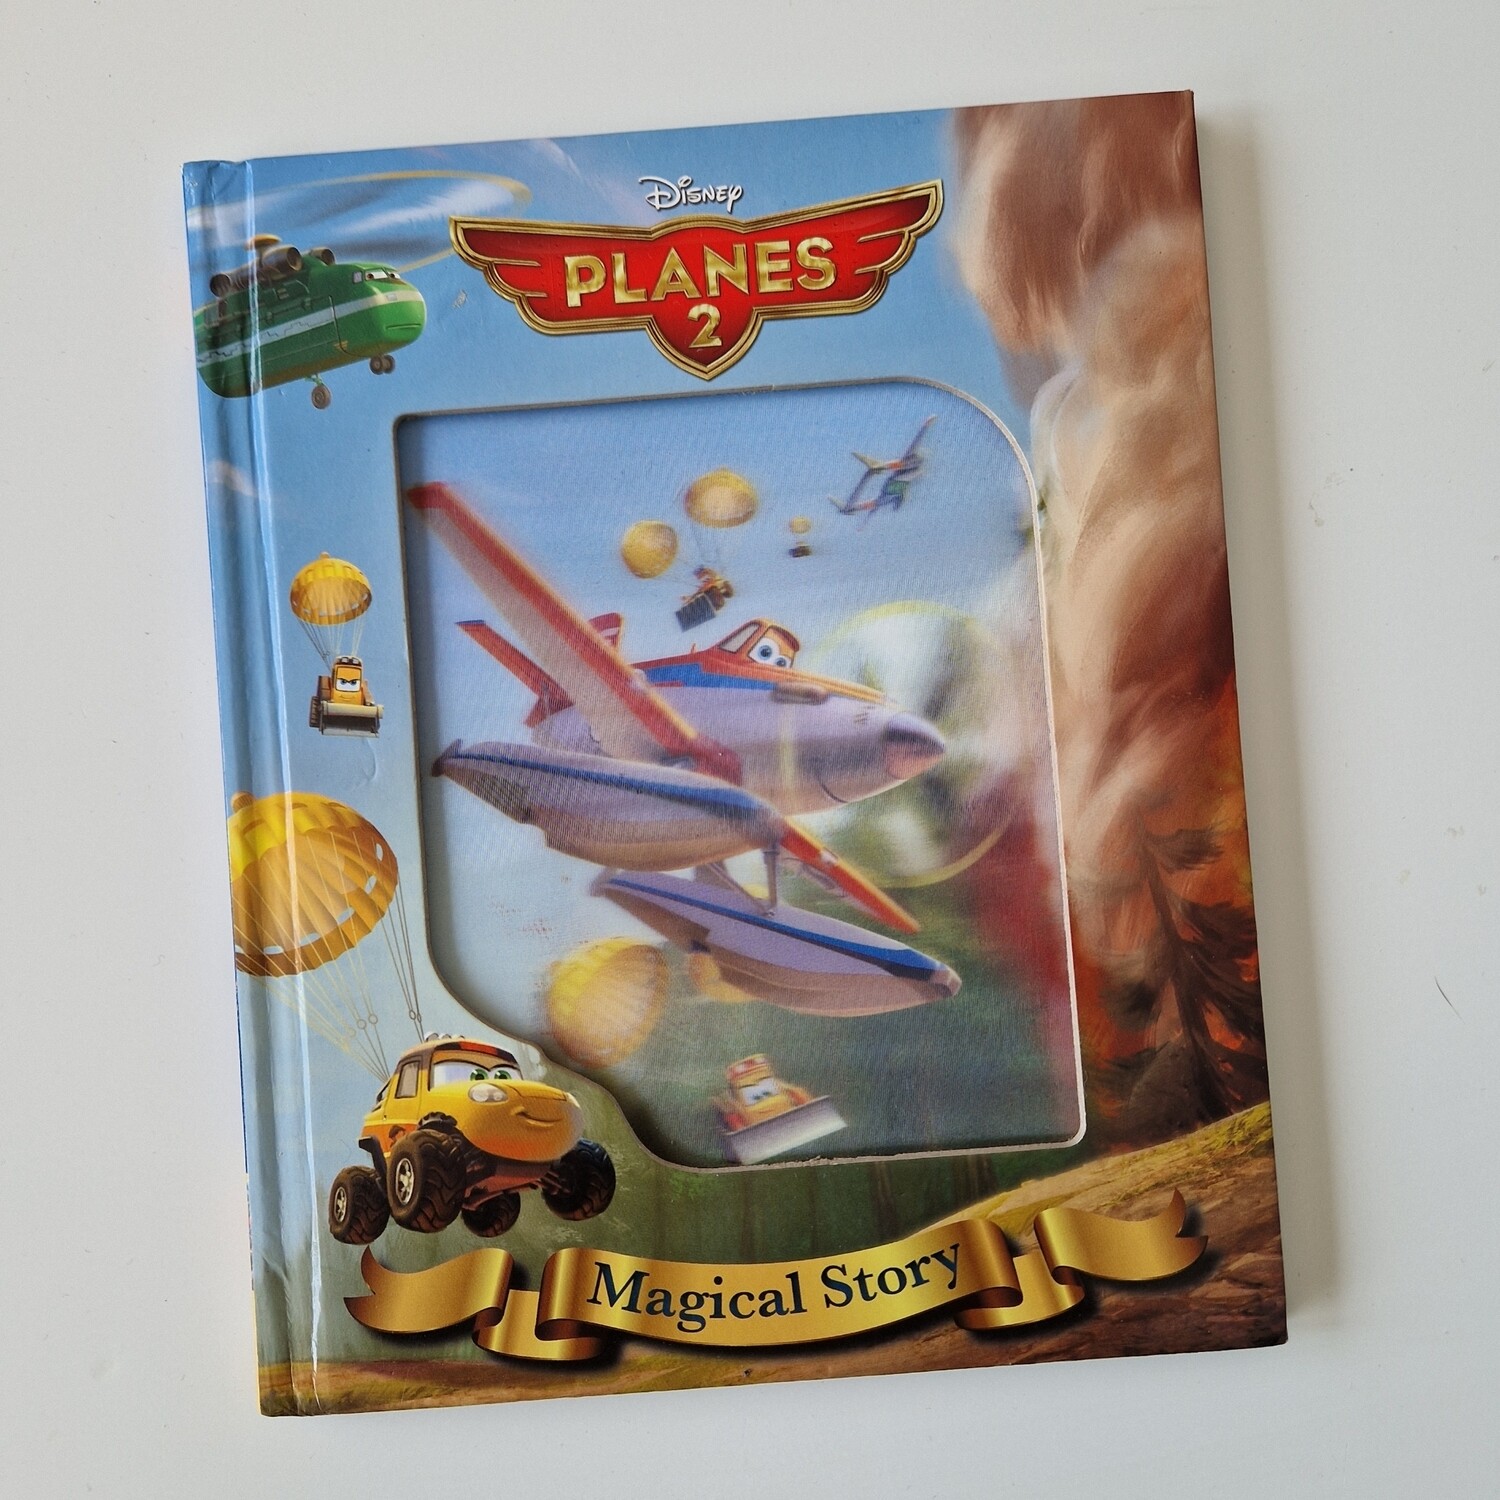 Planes 2 Notebook